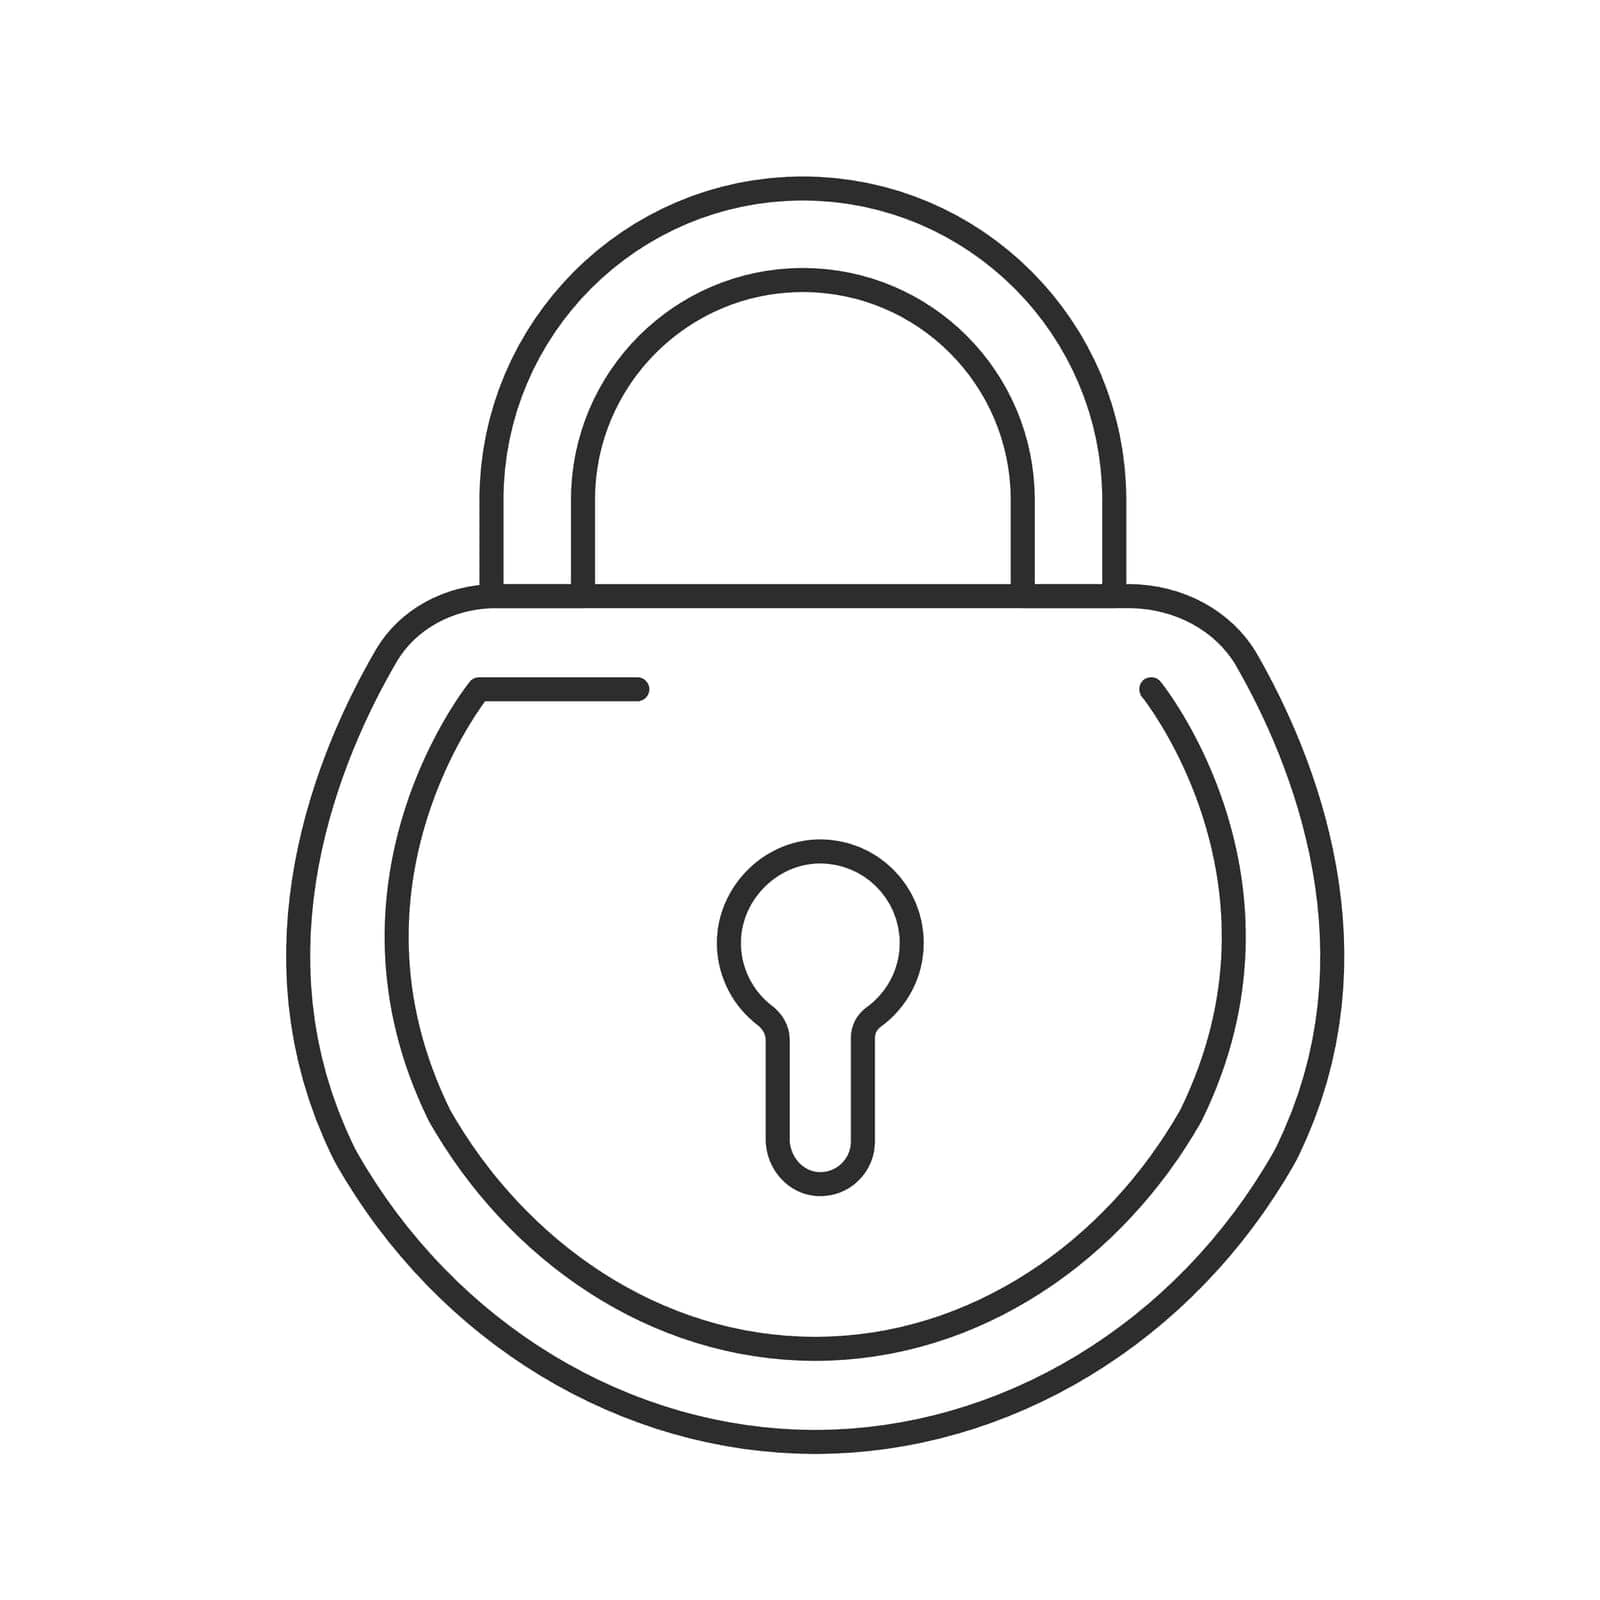 Lock icon with editable stroke. Cyber security by DmytroRazinkov